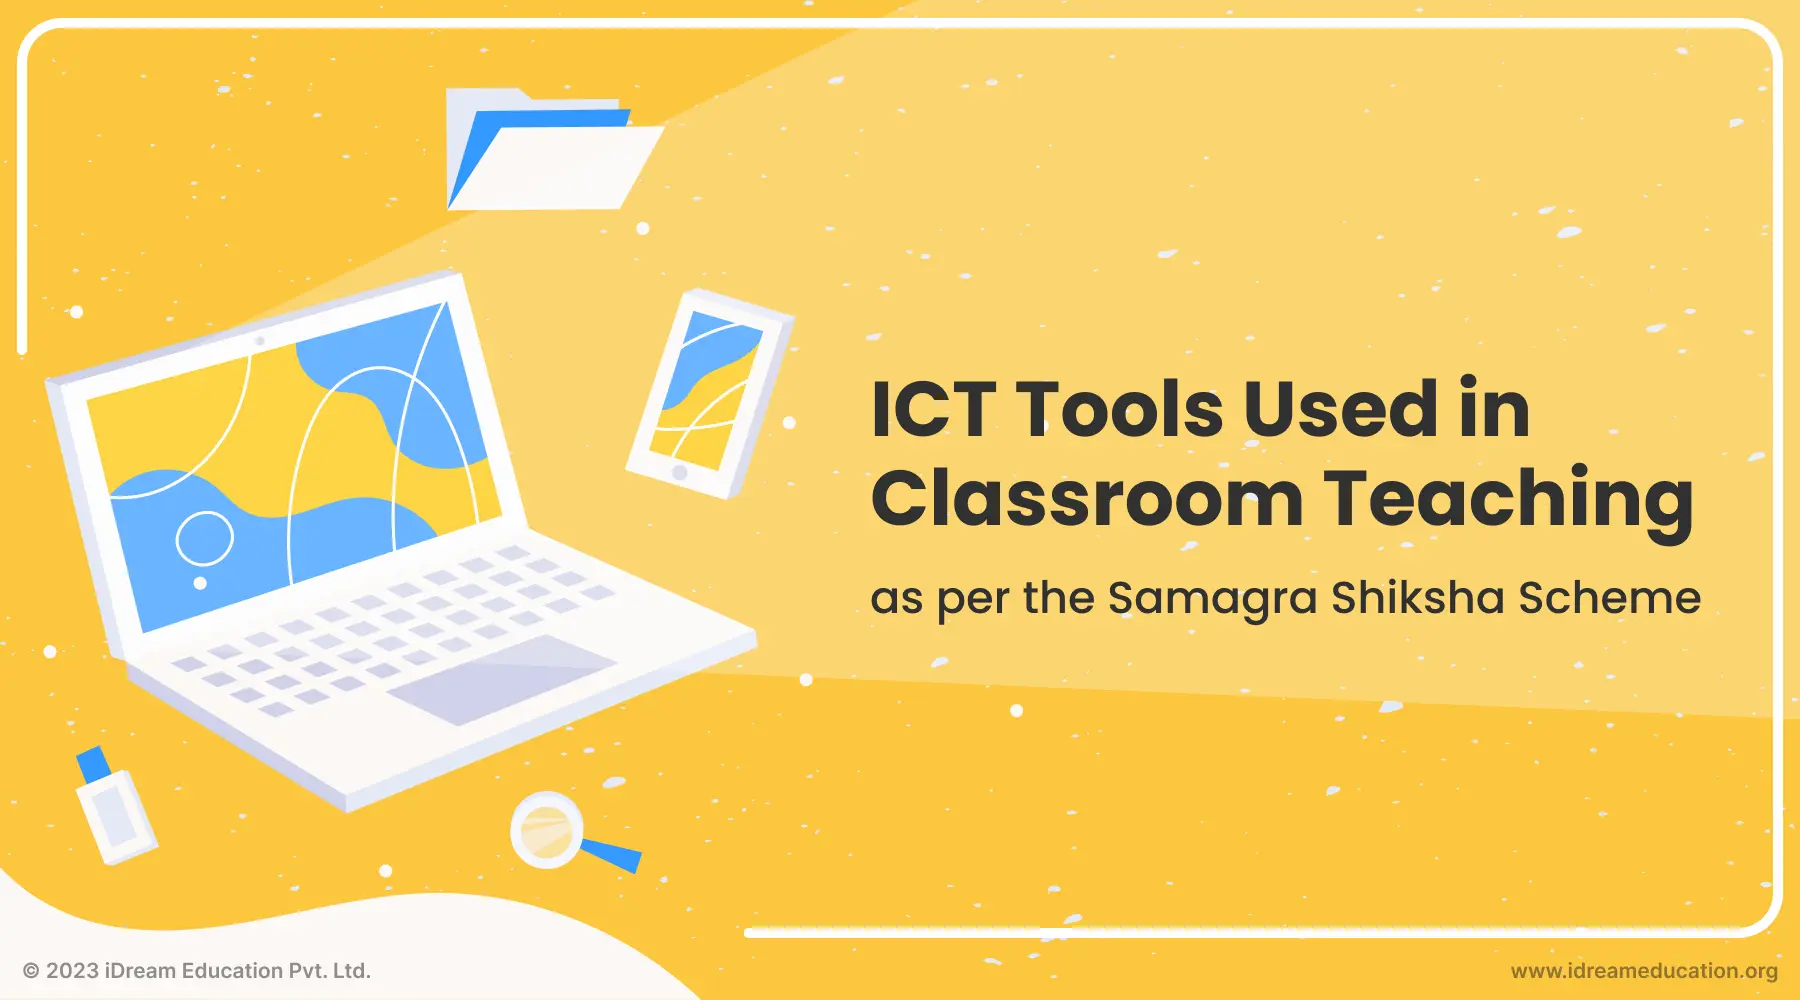 Cover image of iDream Education showcasing Samagra Shiksha-aligned ICT tools Used in Classroom Teaching.